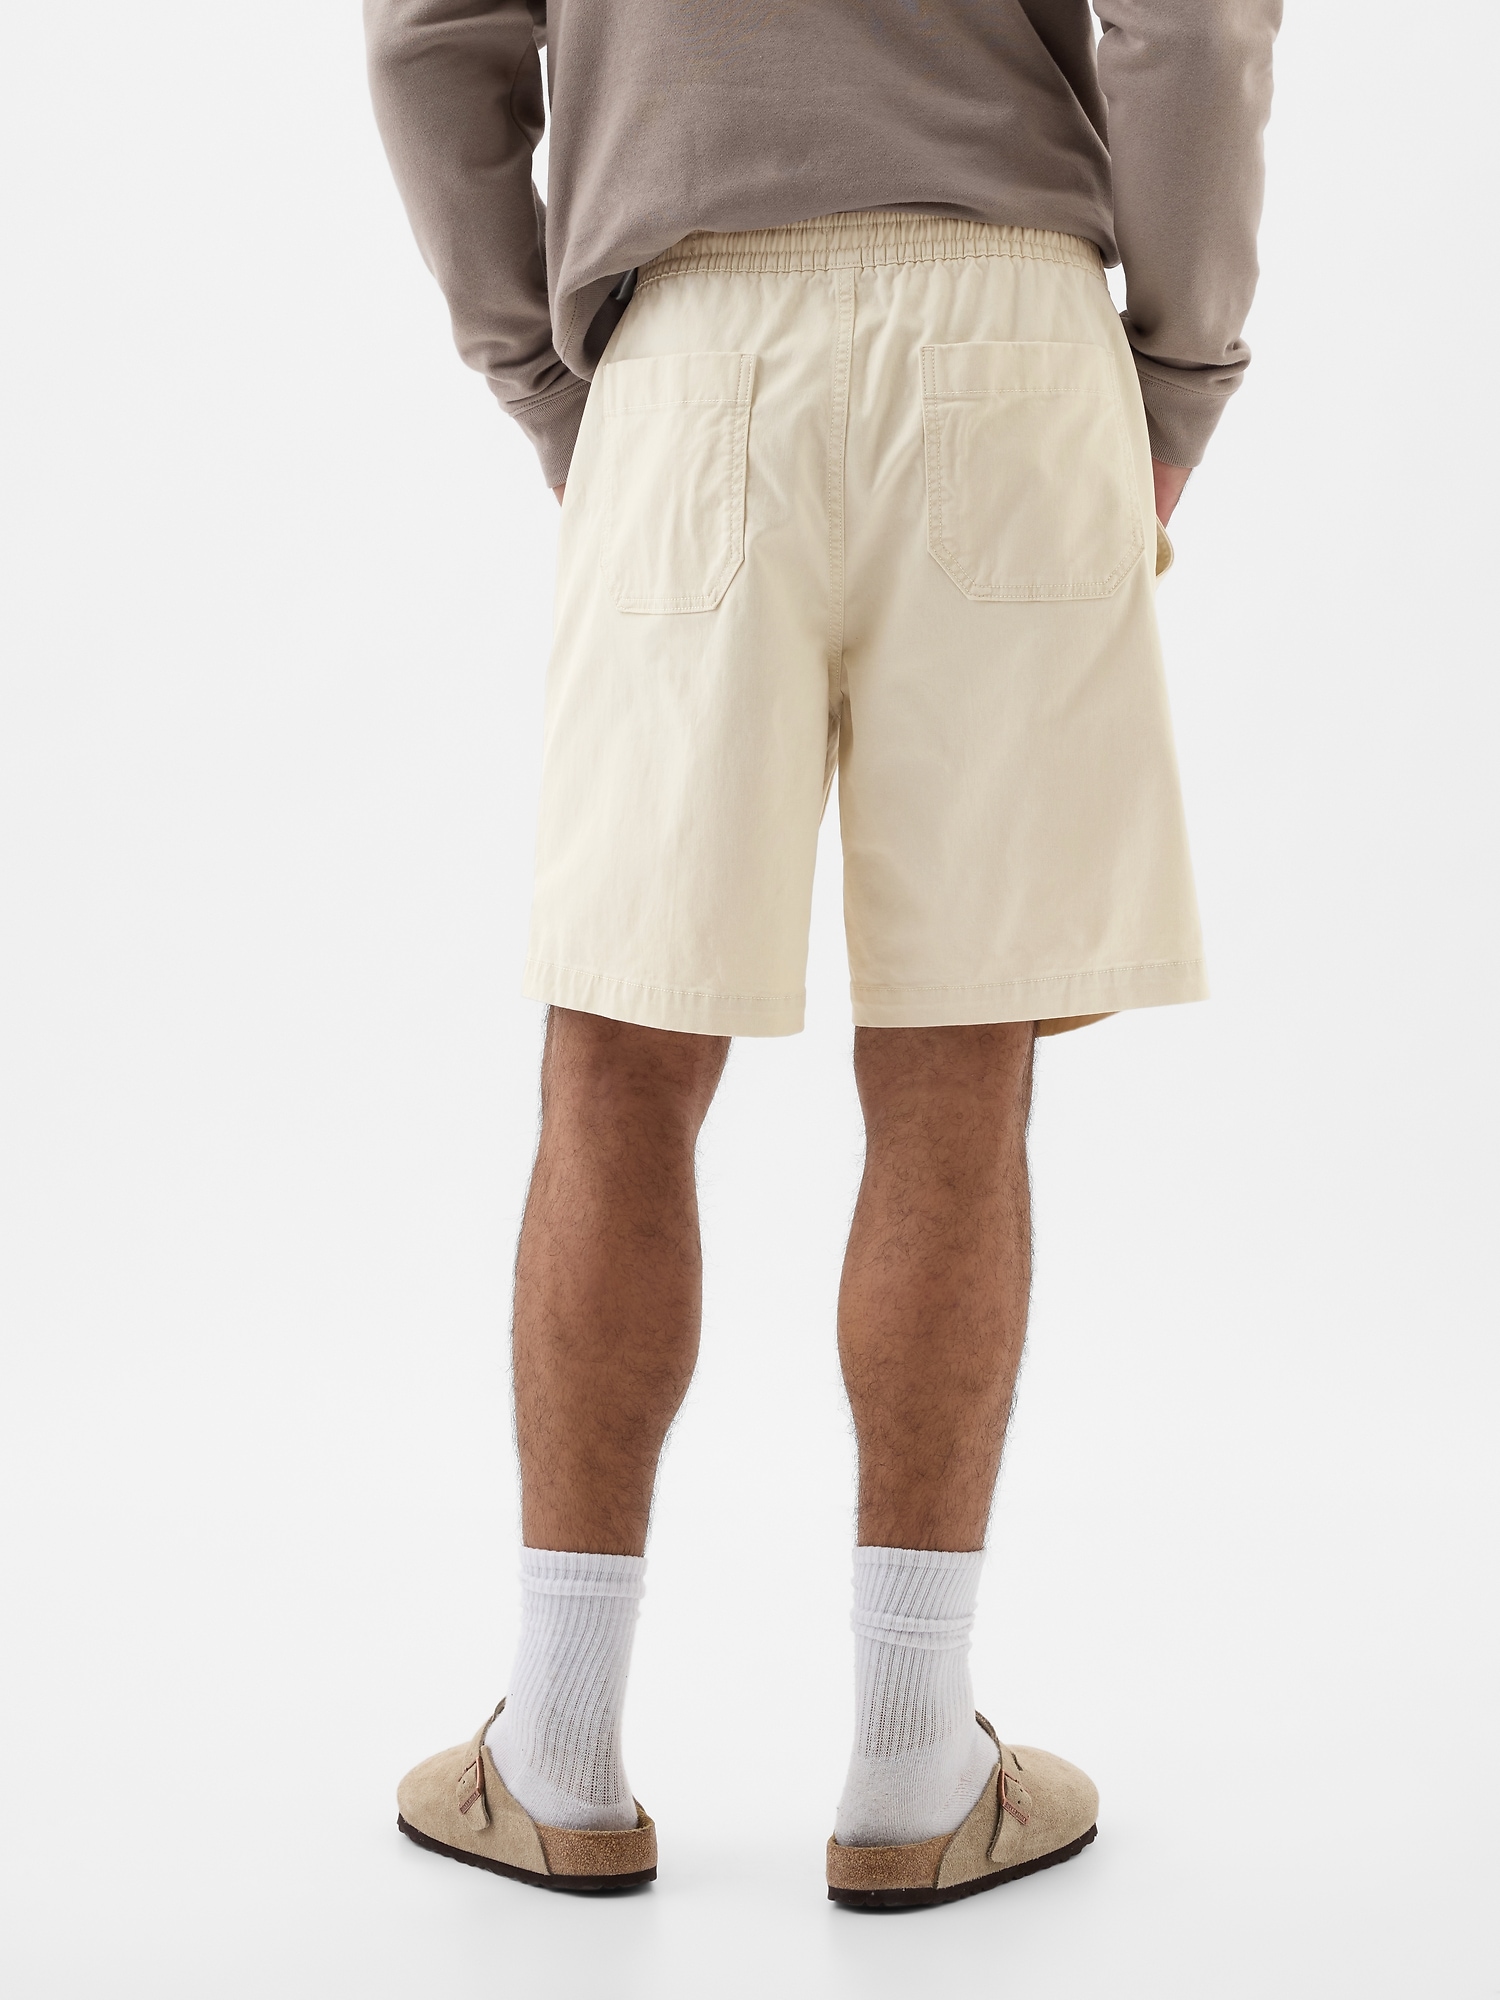 Gap Factory Men's 8 Essential Easy Shorts Tan Chino Pant Size XXL